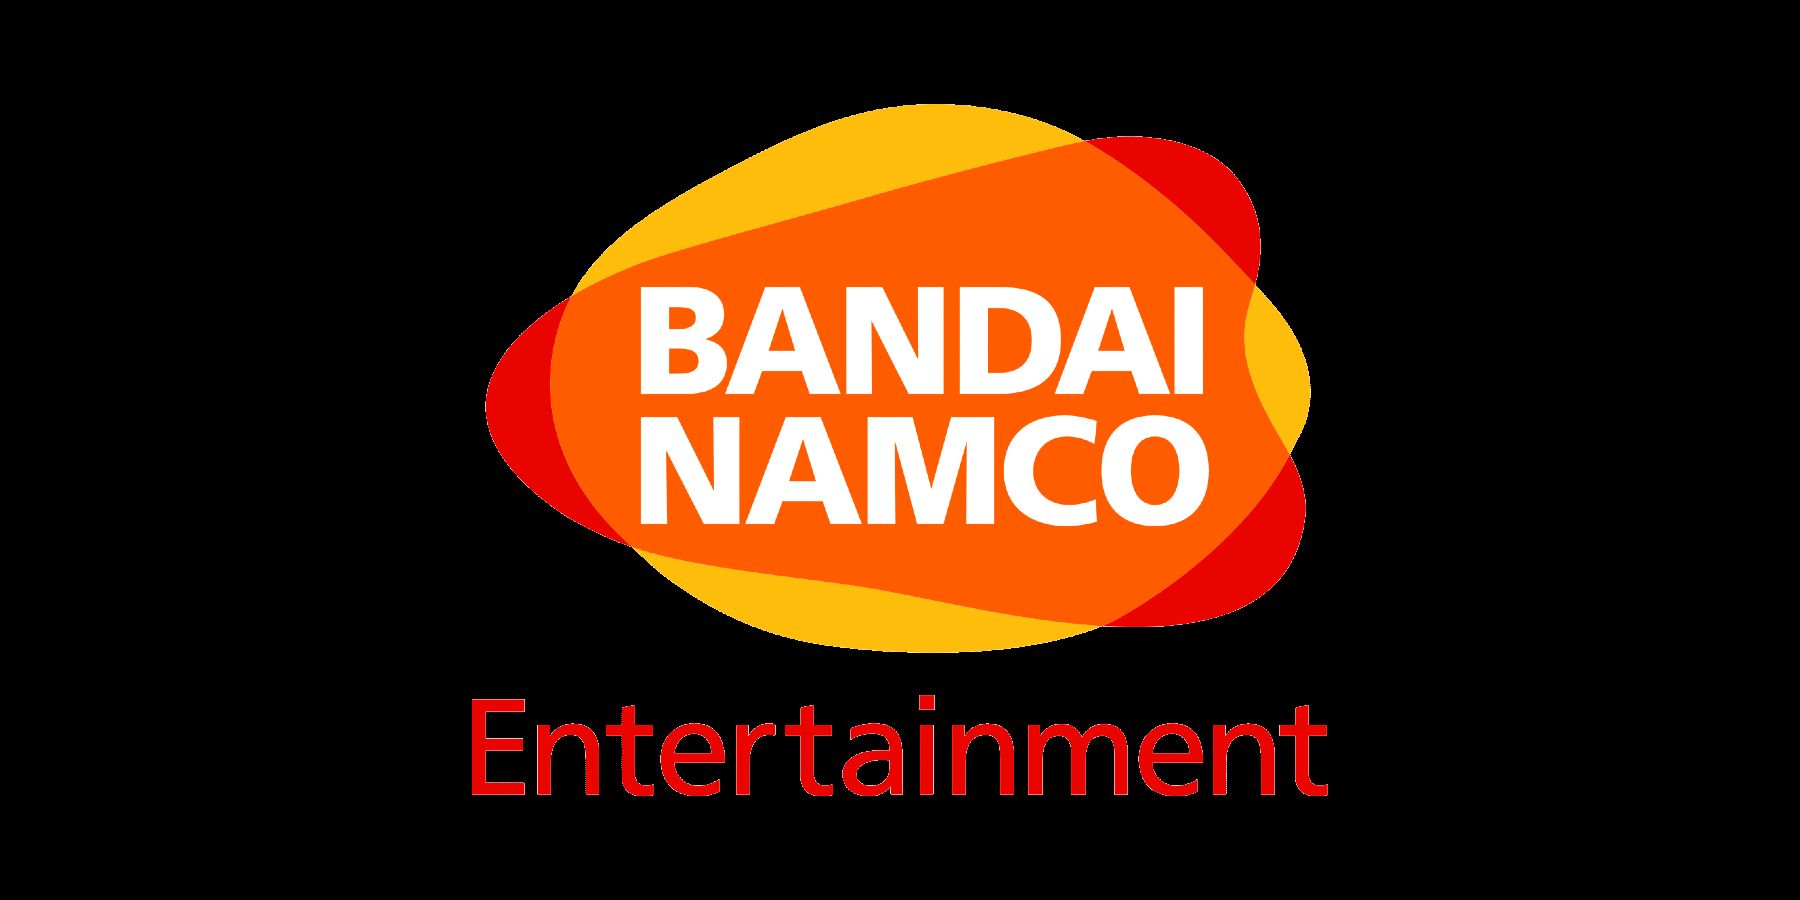 Bandai Namco ma nowe logo